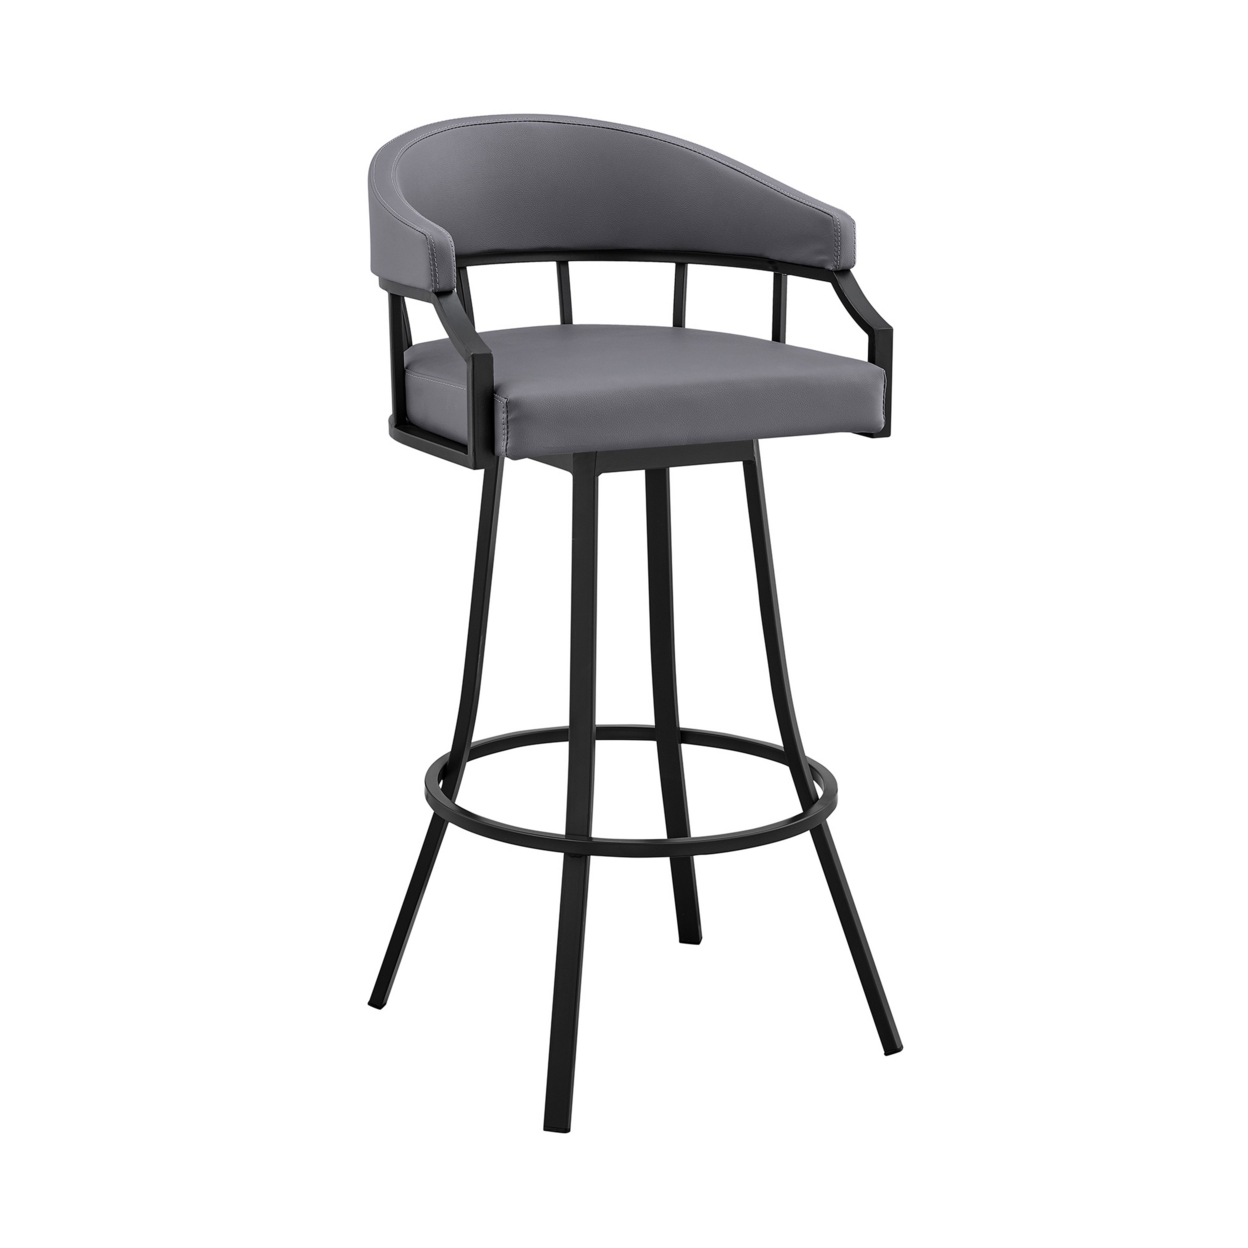 Cade 30 Inch Bar Stool, Swivel Chair, Faux Leather Cushion, Gray, Black- Saltoro Sherpi